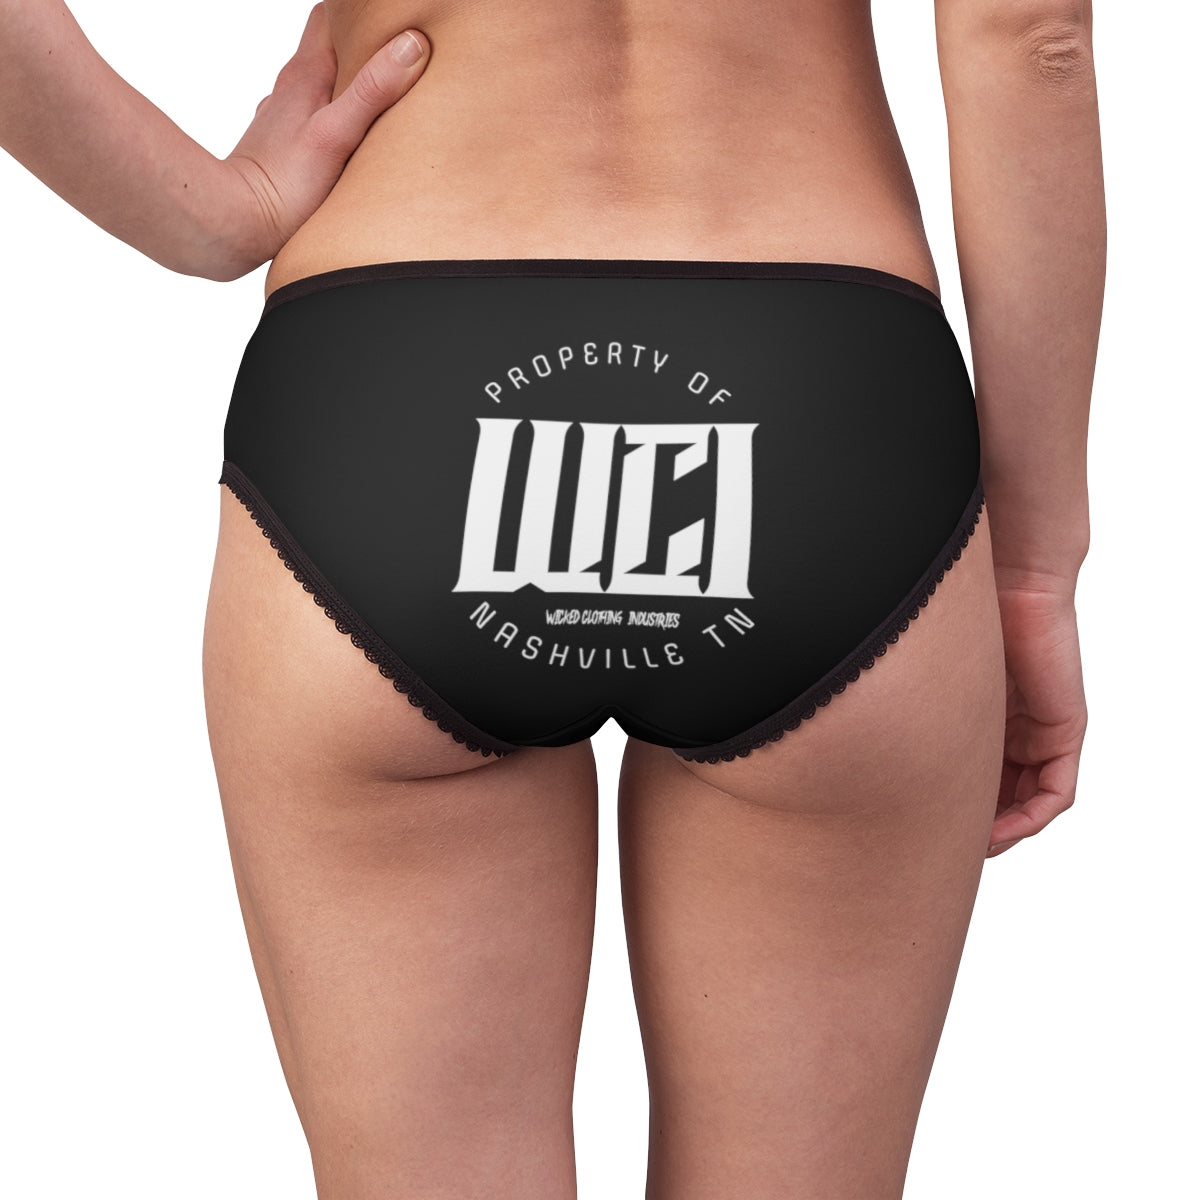 Property Of WCI/Women's undies